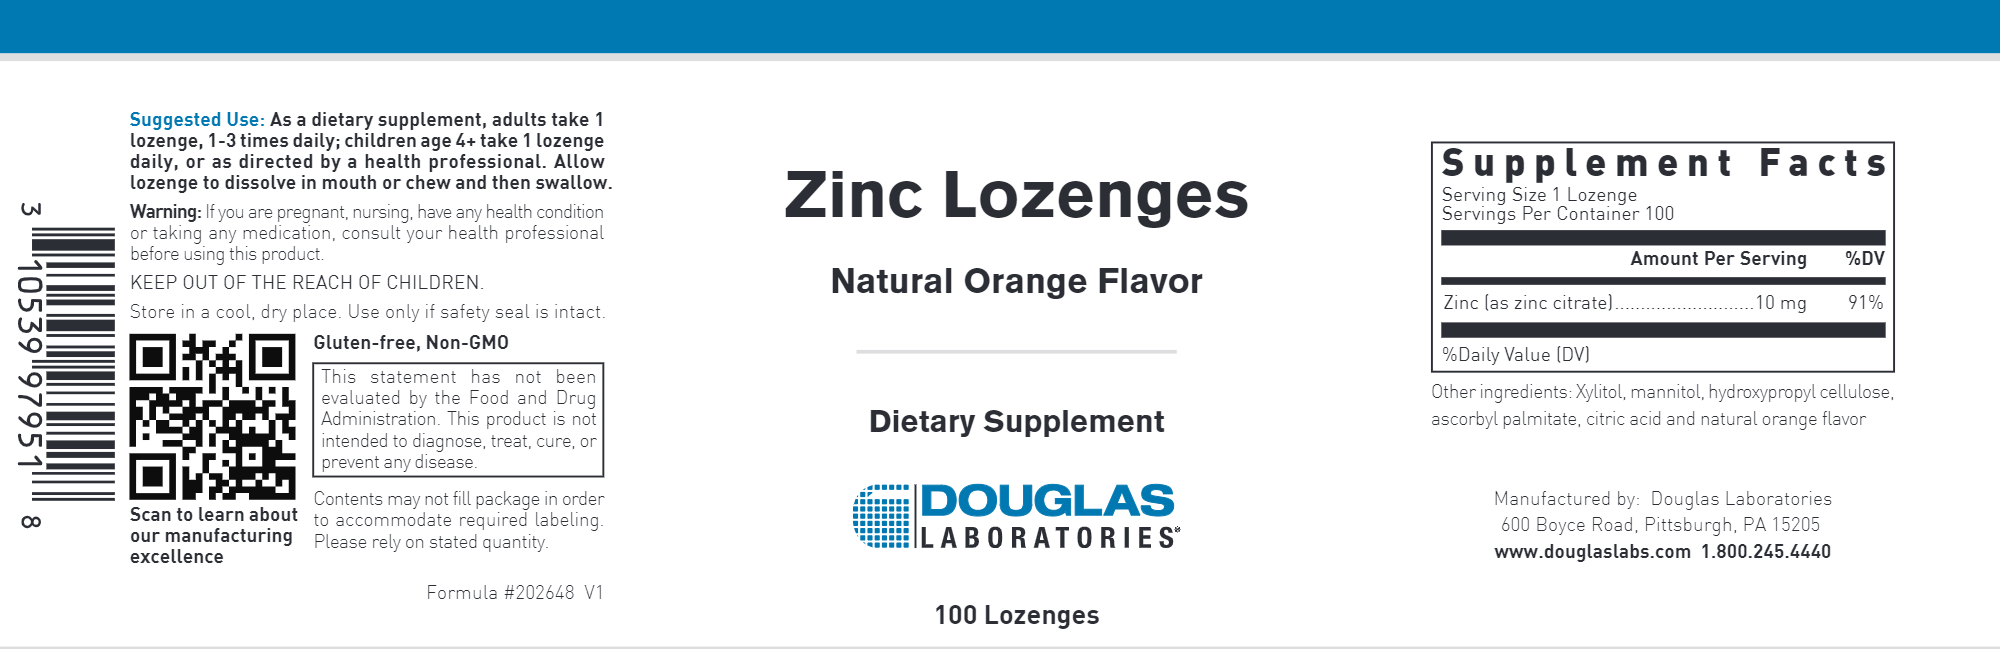 Zinc Lozenges 100 loz ingredients